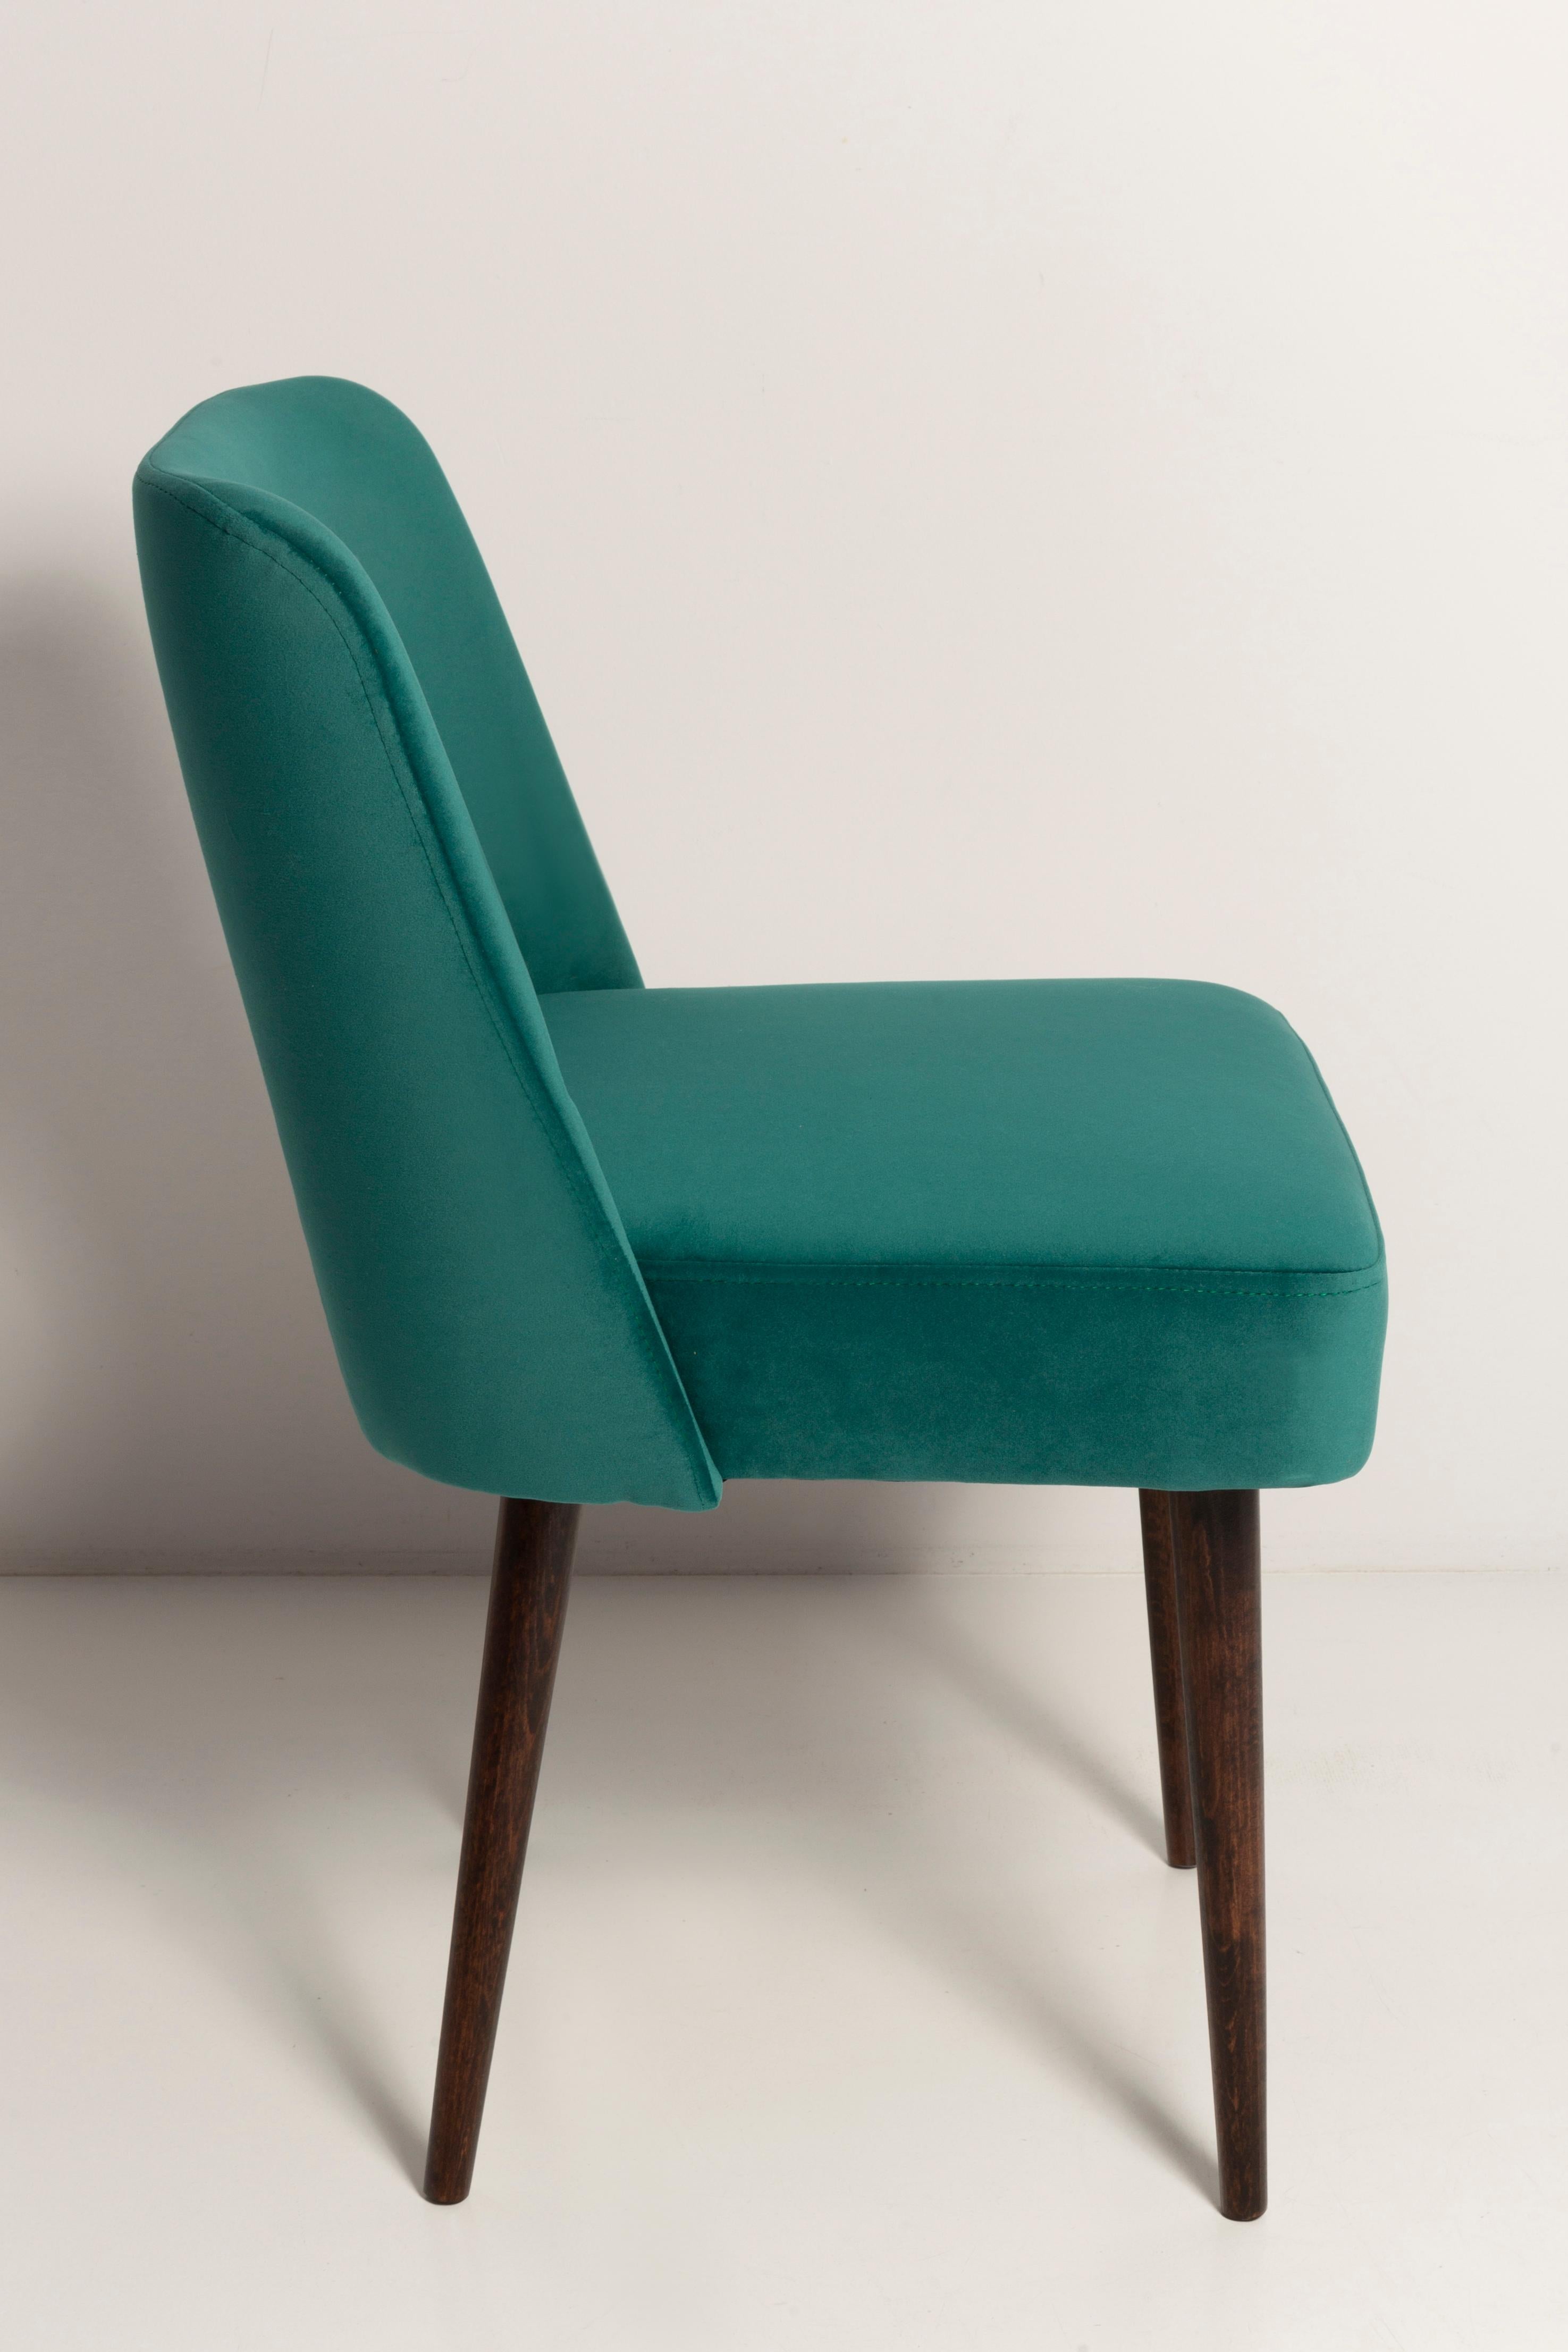 Dark Green Velvet 'Shell' Chair, Europe, 1960s In Excellent Condition For Sale In 05-080 Hornowek, PL